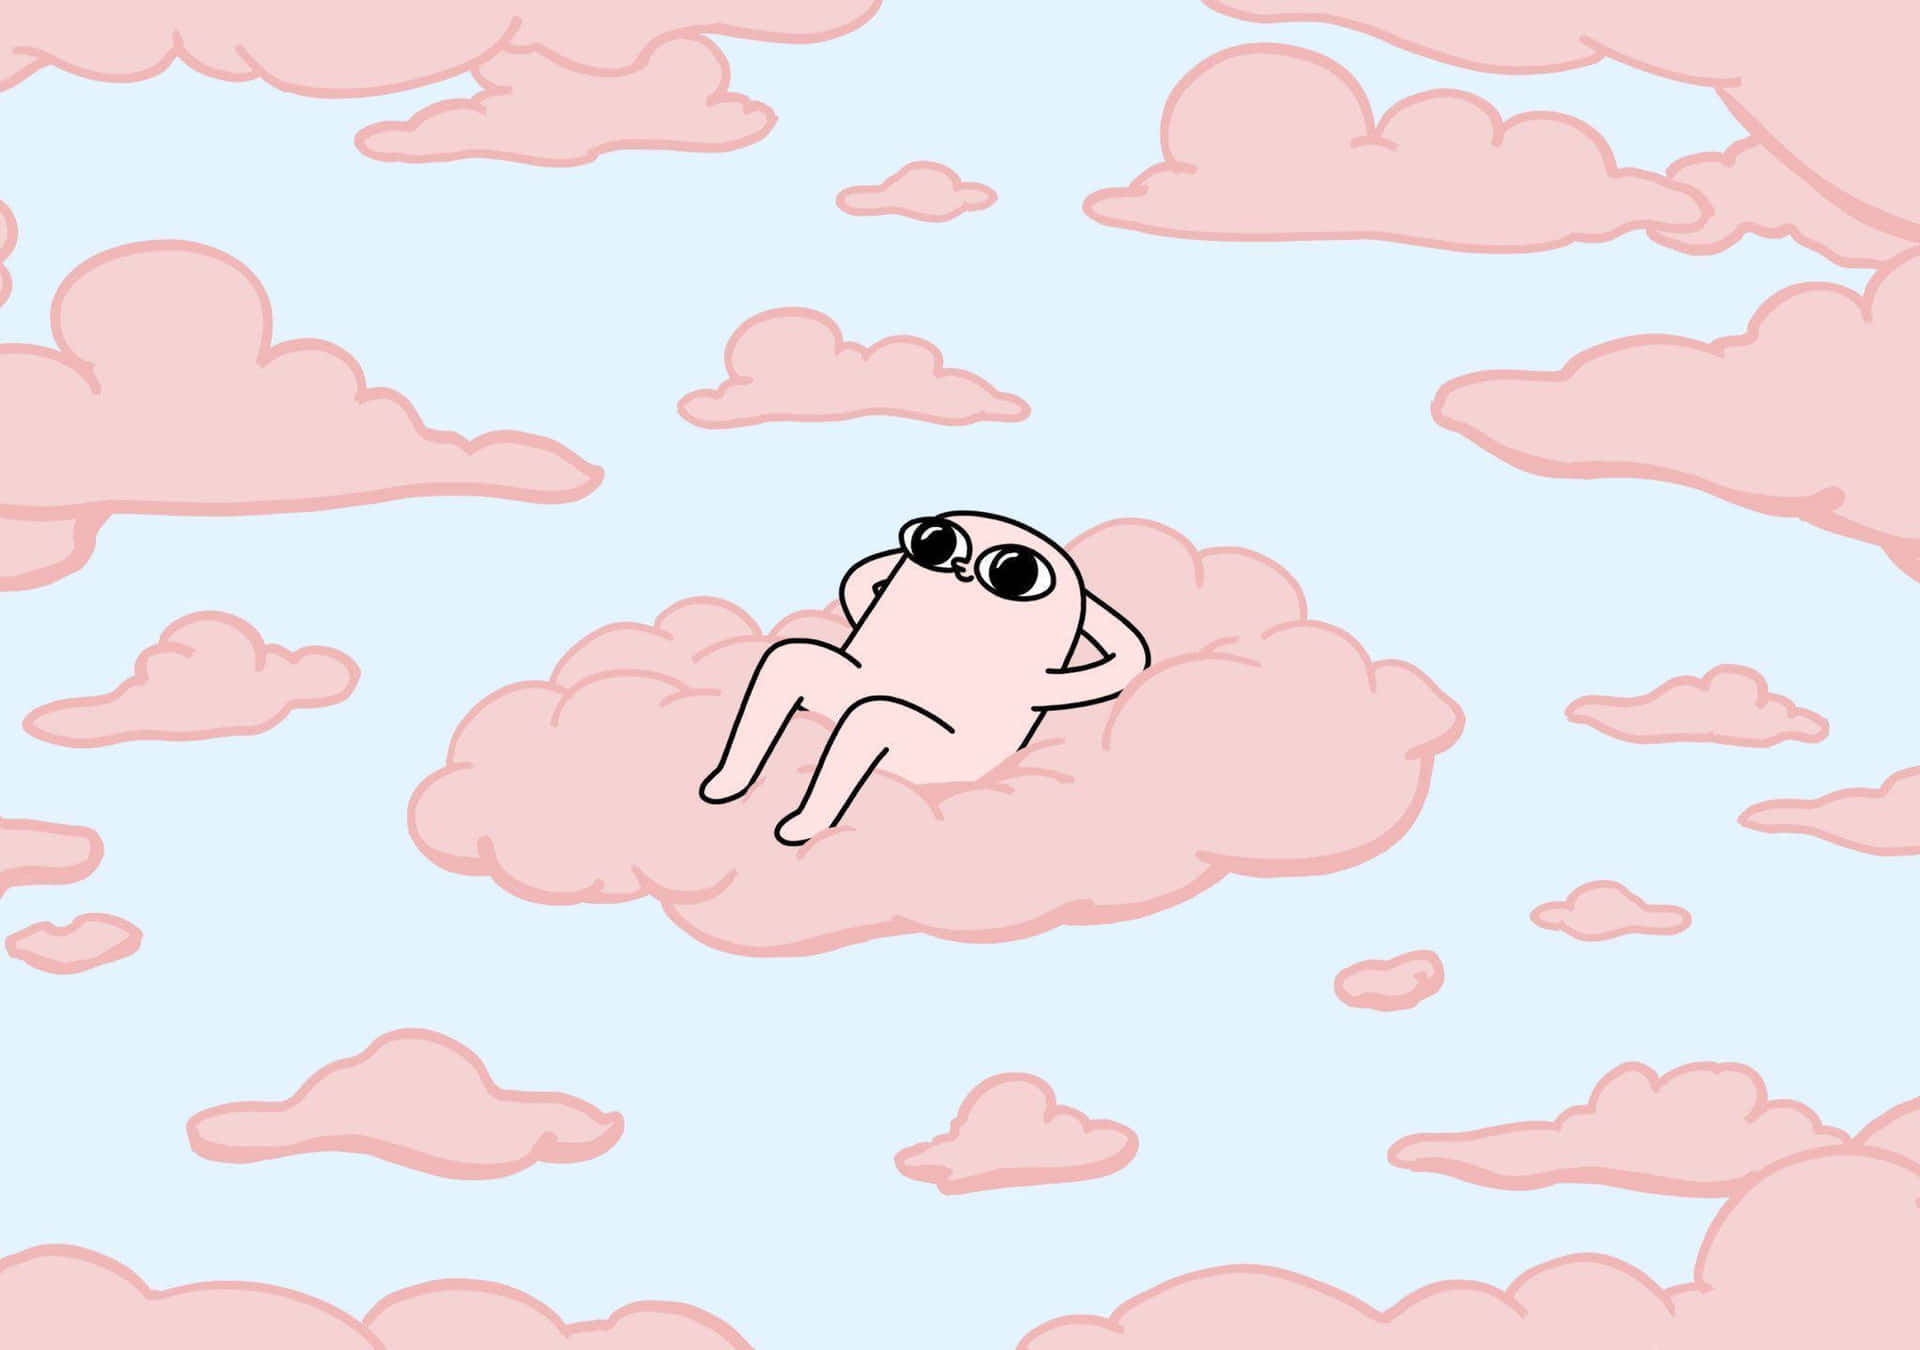 A Cartoon Person Sitting On A Cloud